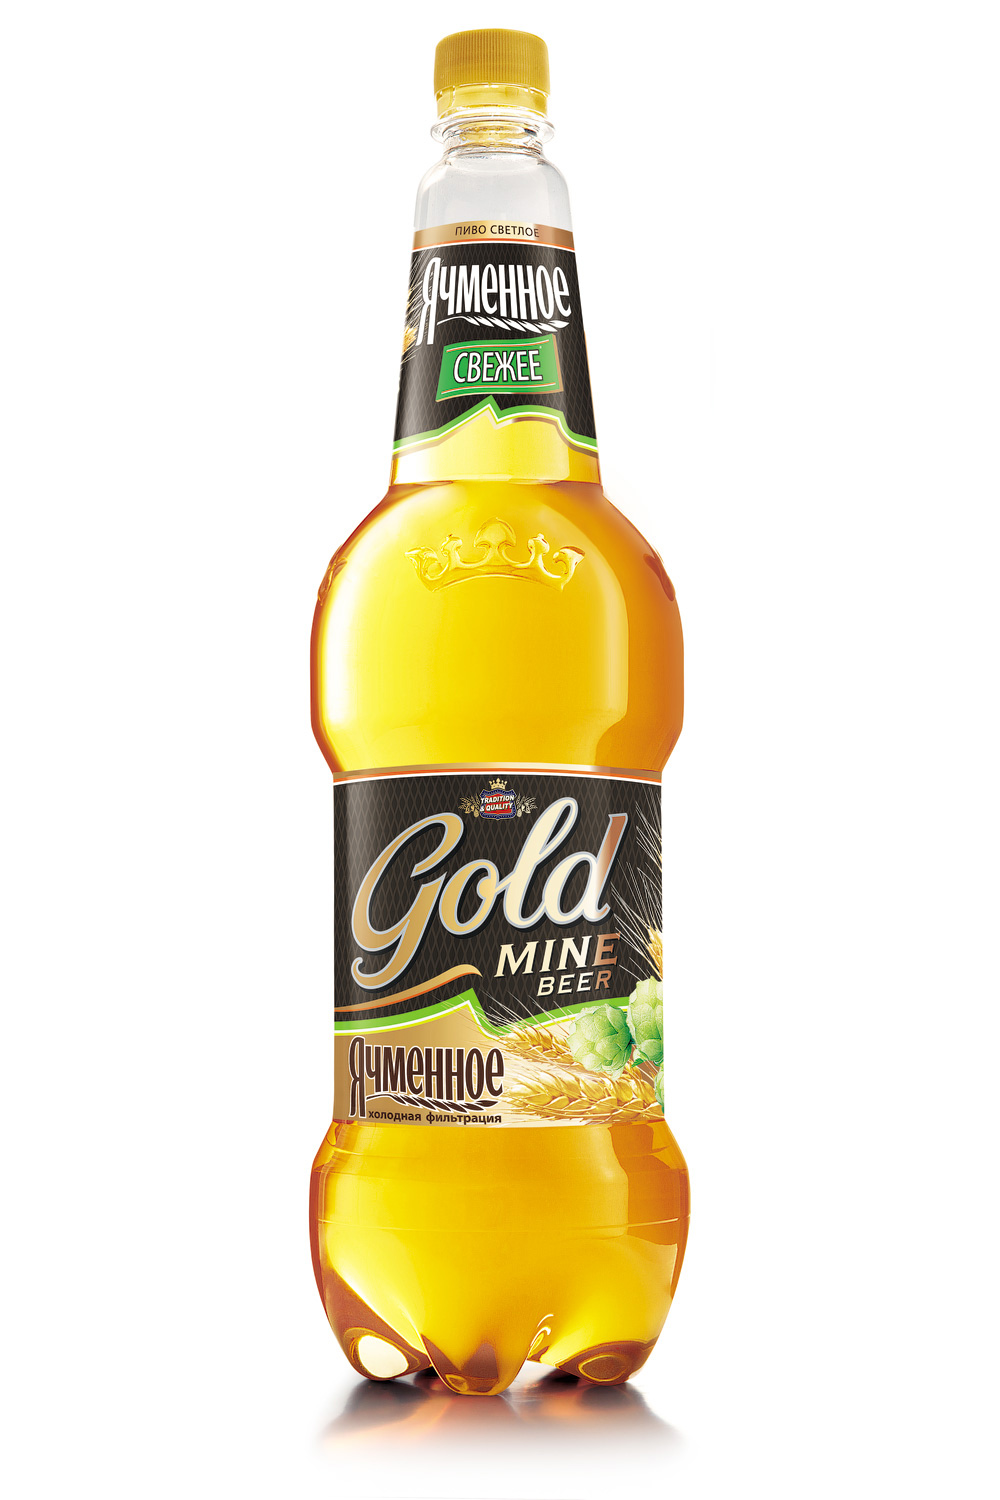 Gold beer. Пиво Голд майн ячменное. Пиво Голд бир 1.5 крепость. Пиво Gold mine Beer ячменное. Пиво Голд майн бир 1,35.